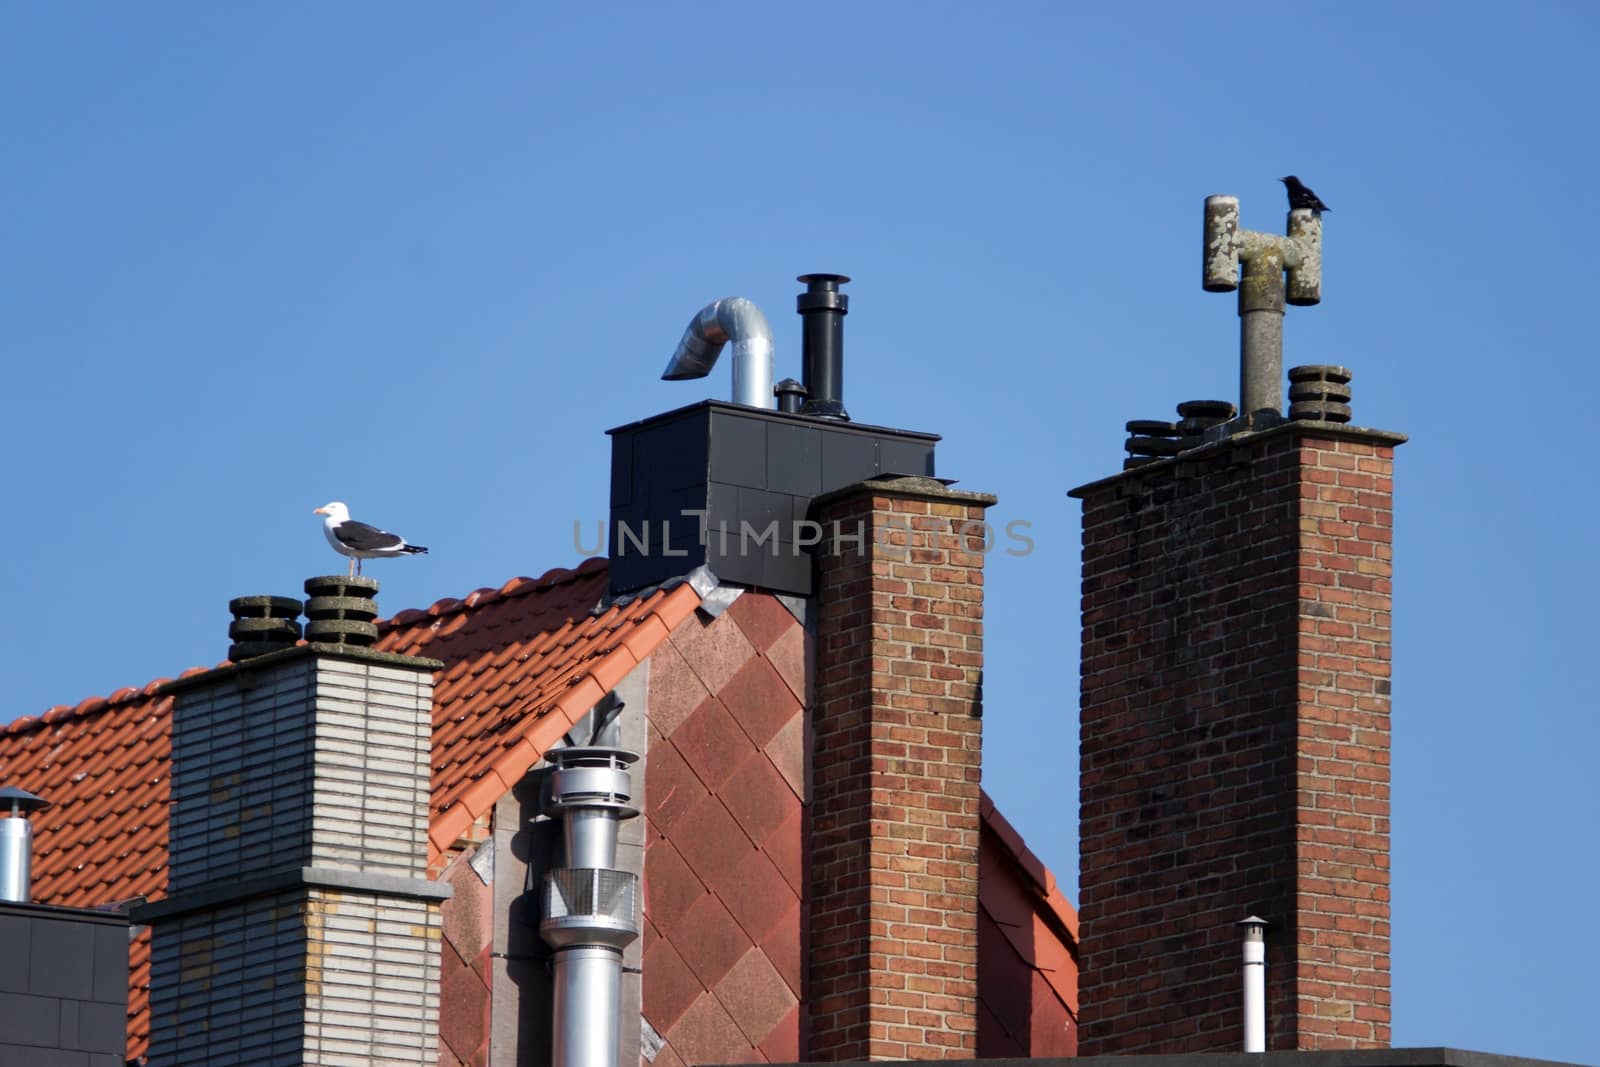 Seagulls on chimneys